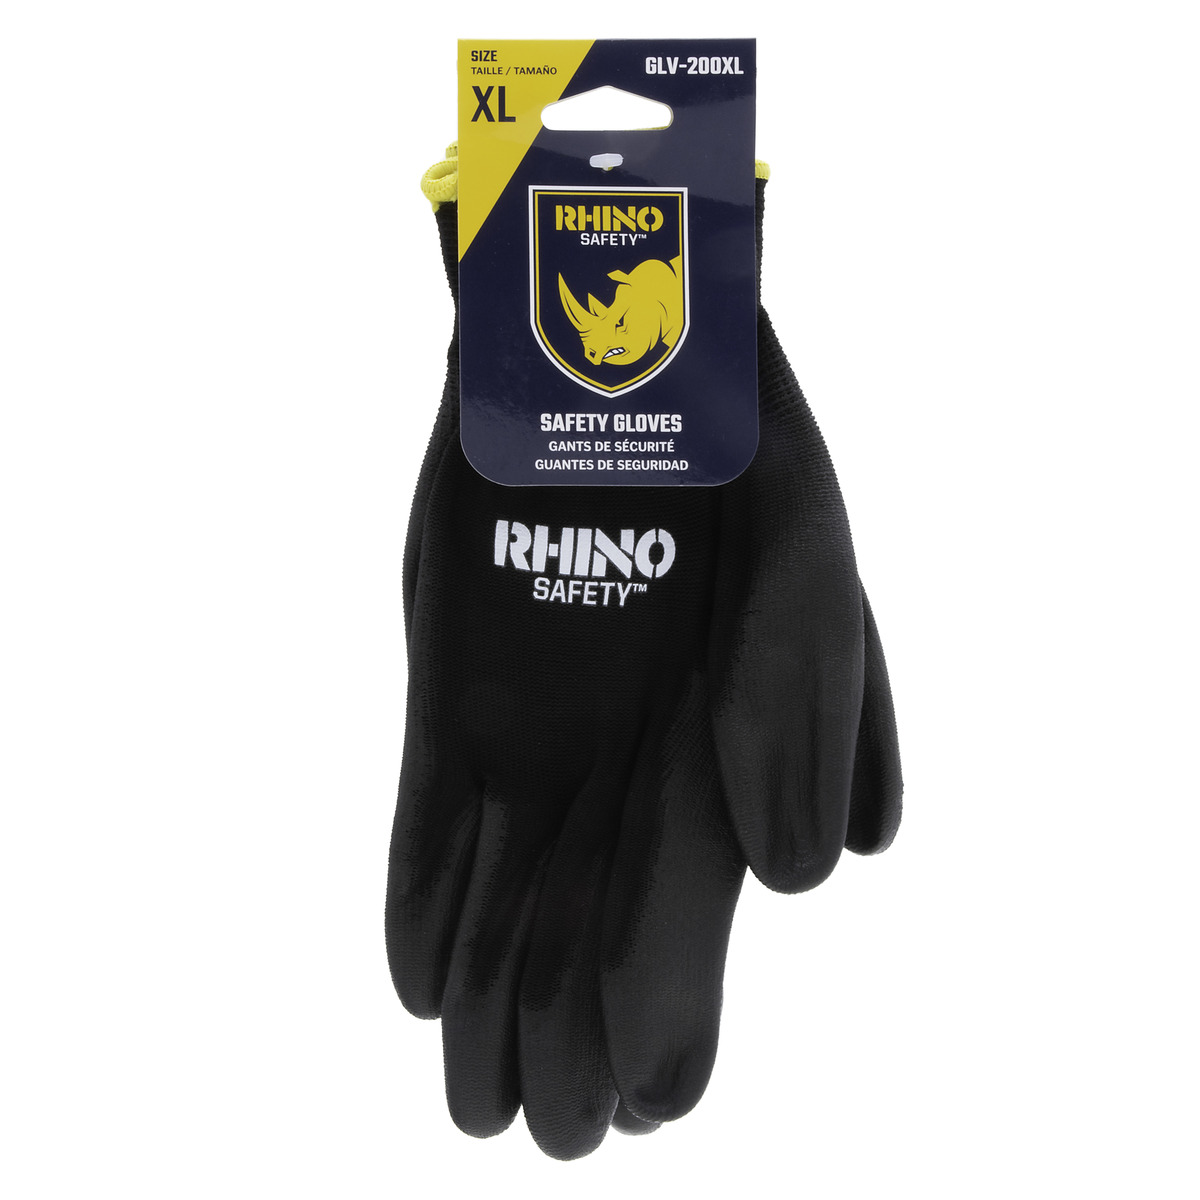 Global PUG PUG17-L Polyurethane Coated Nylon Work Gloves, Black